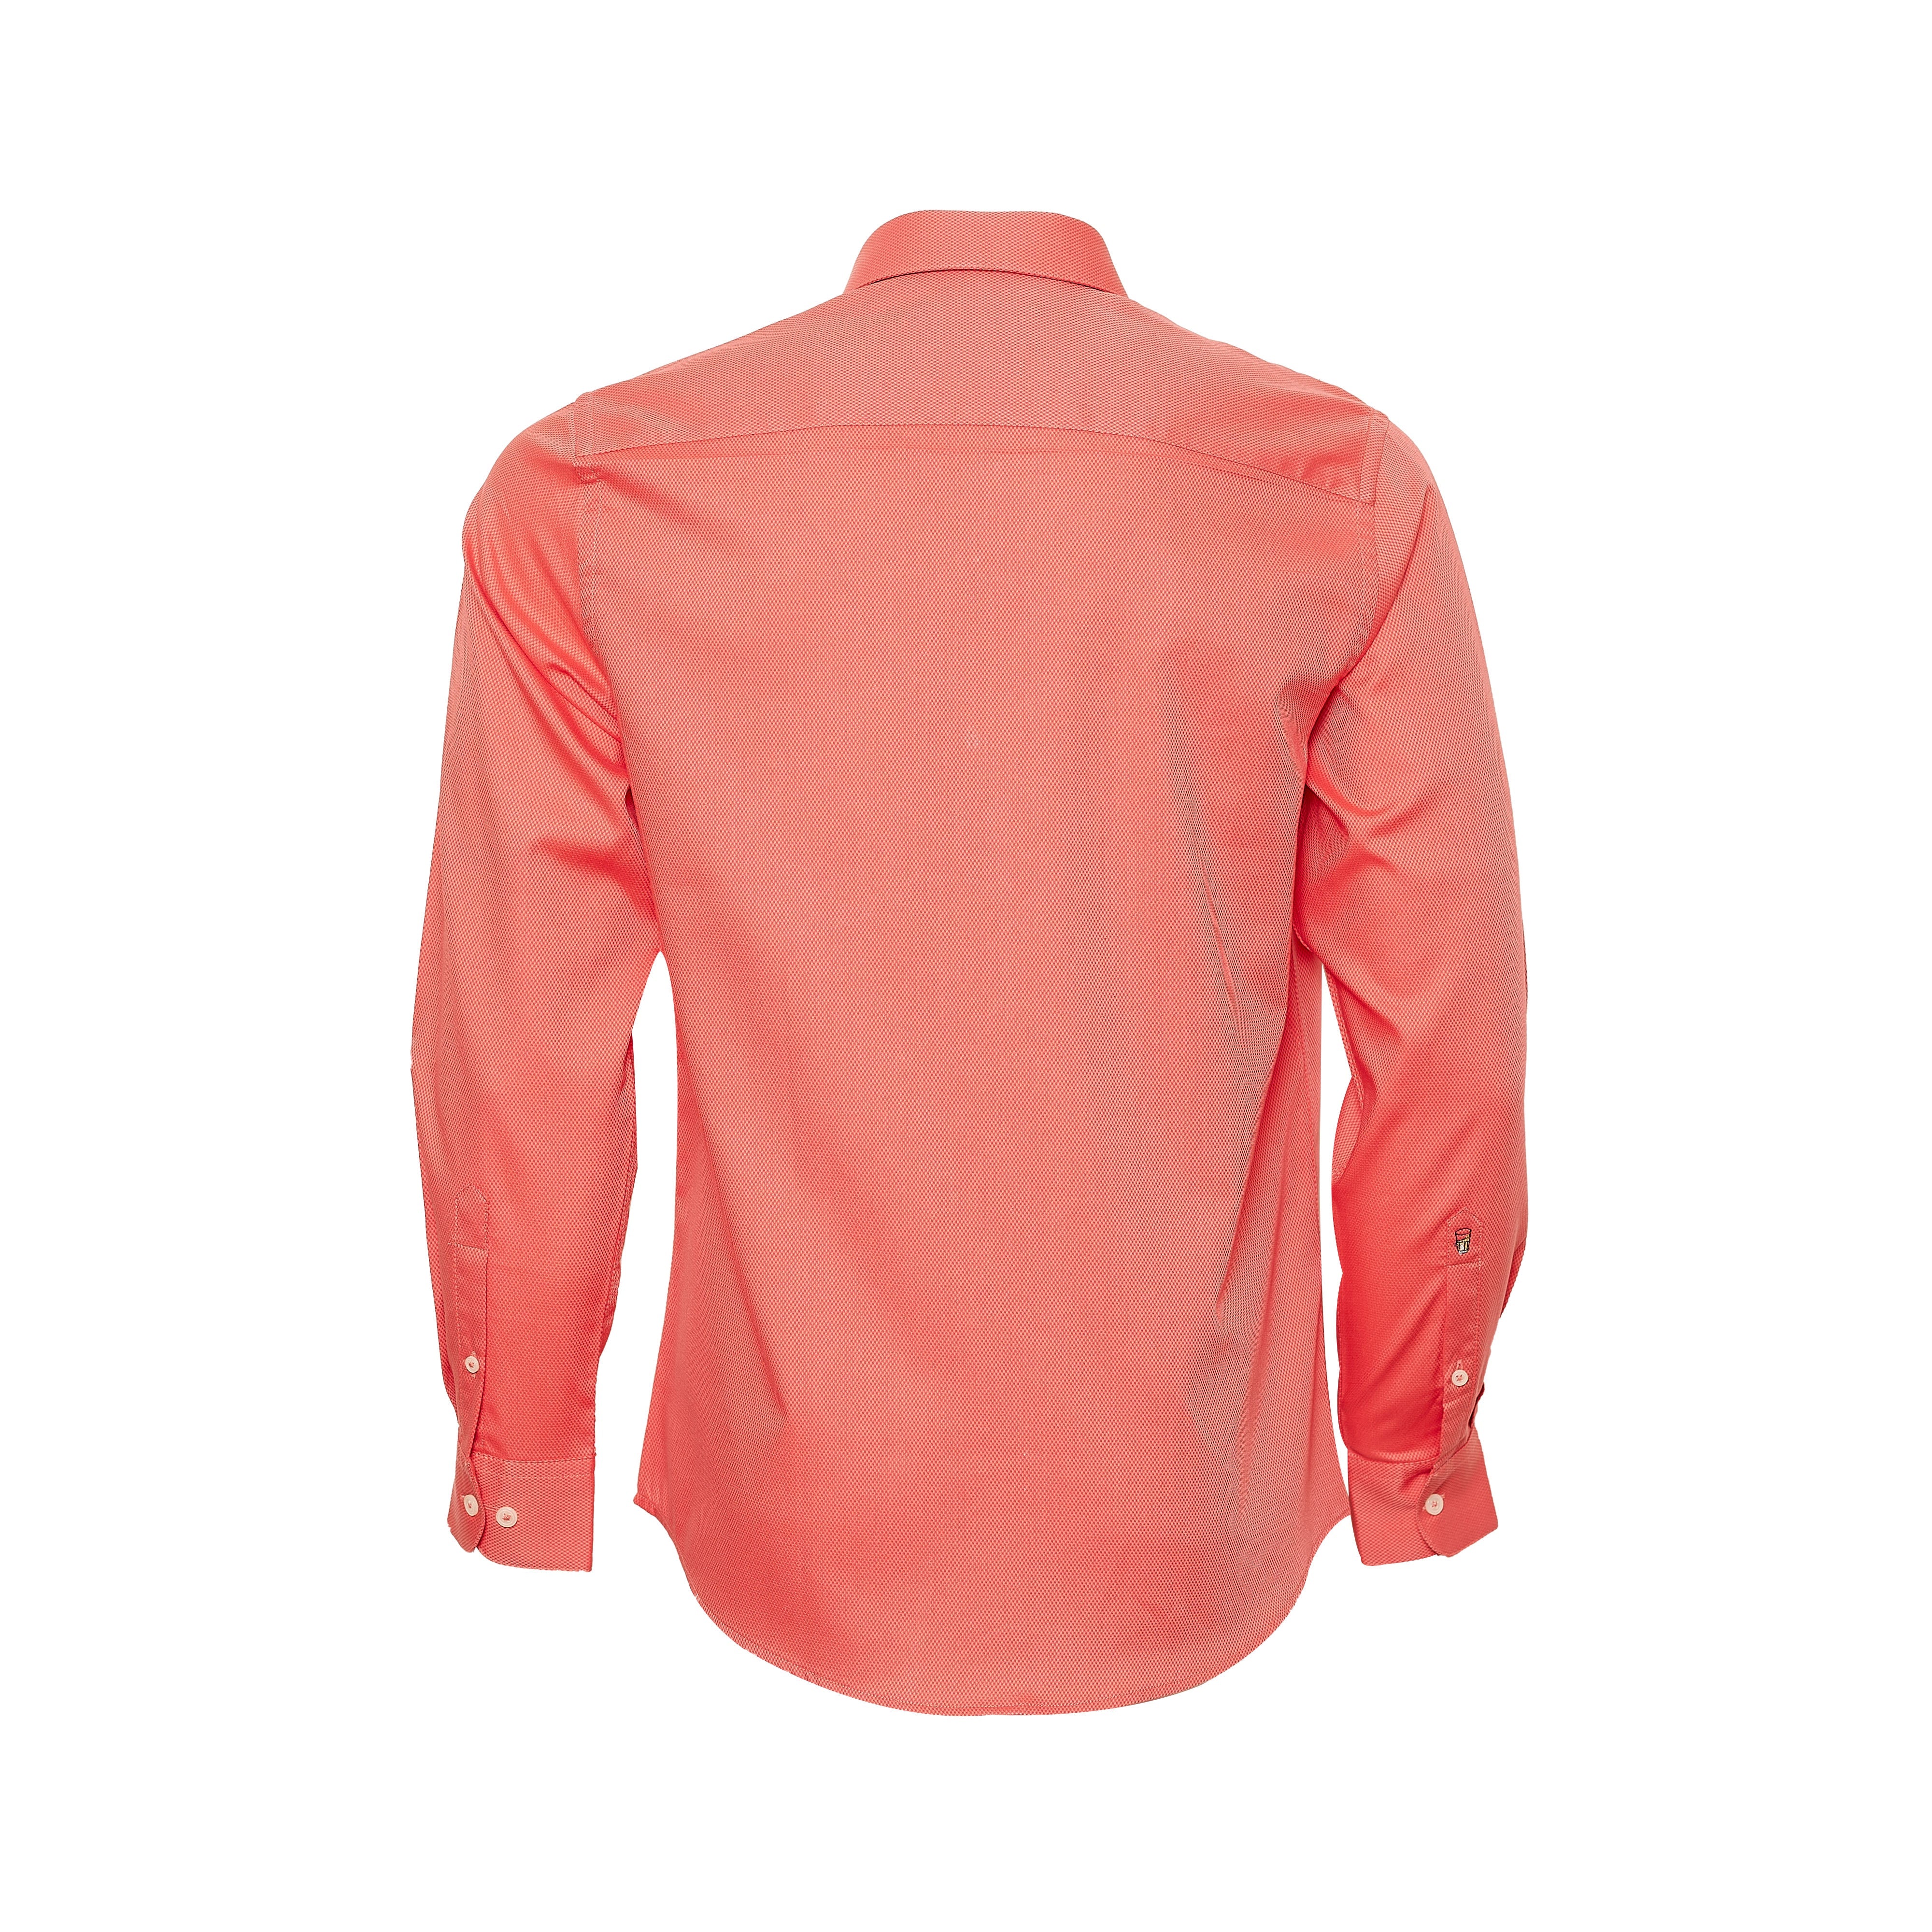 Superfine Supima Cotton, Deep Peach Full-sleeved shirt